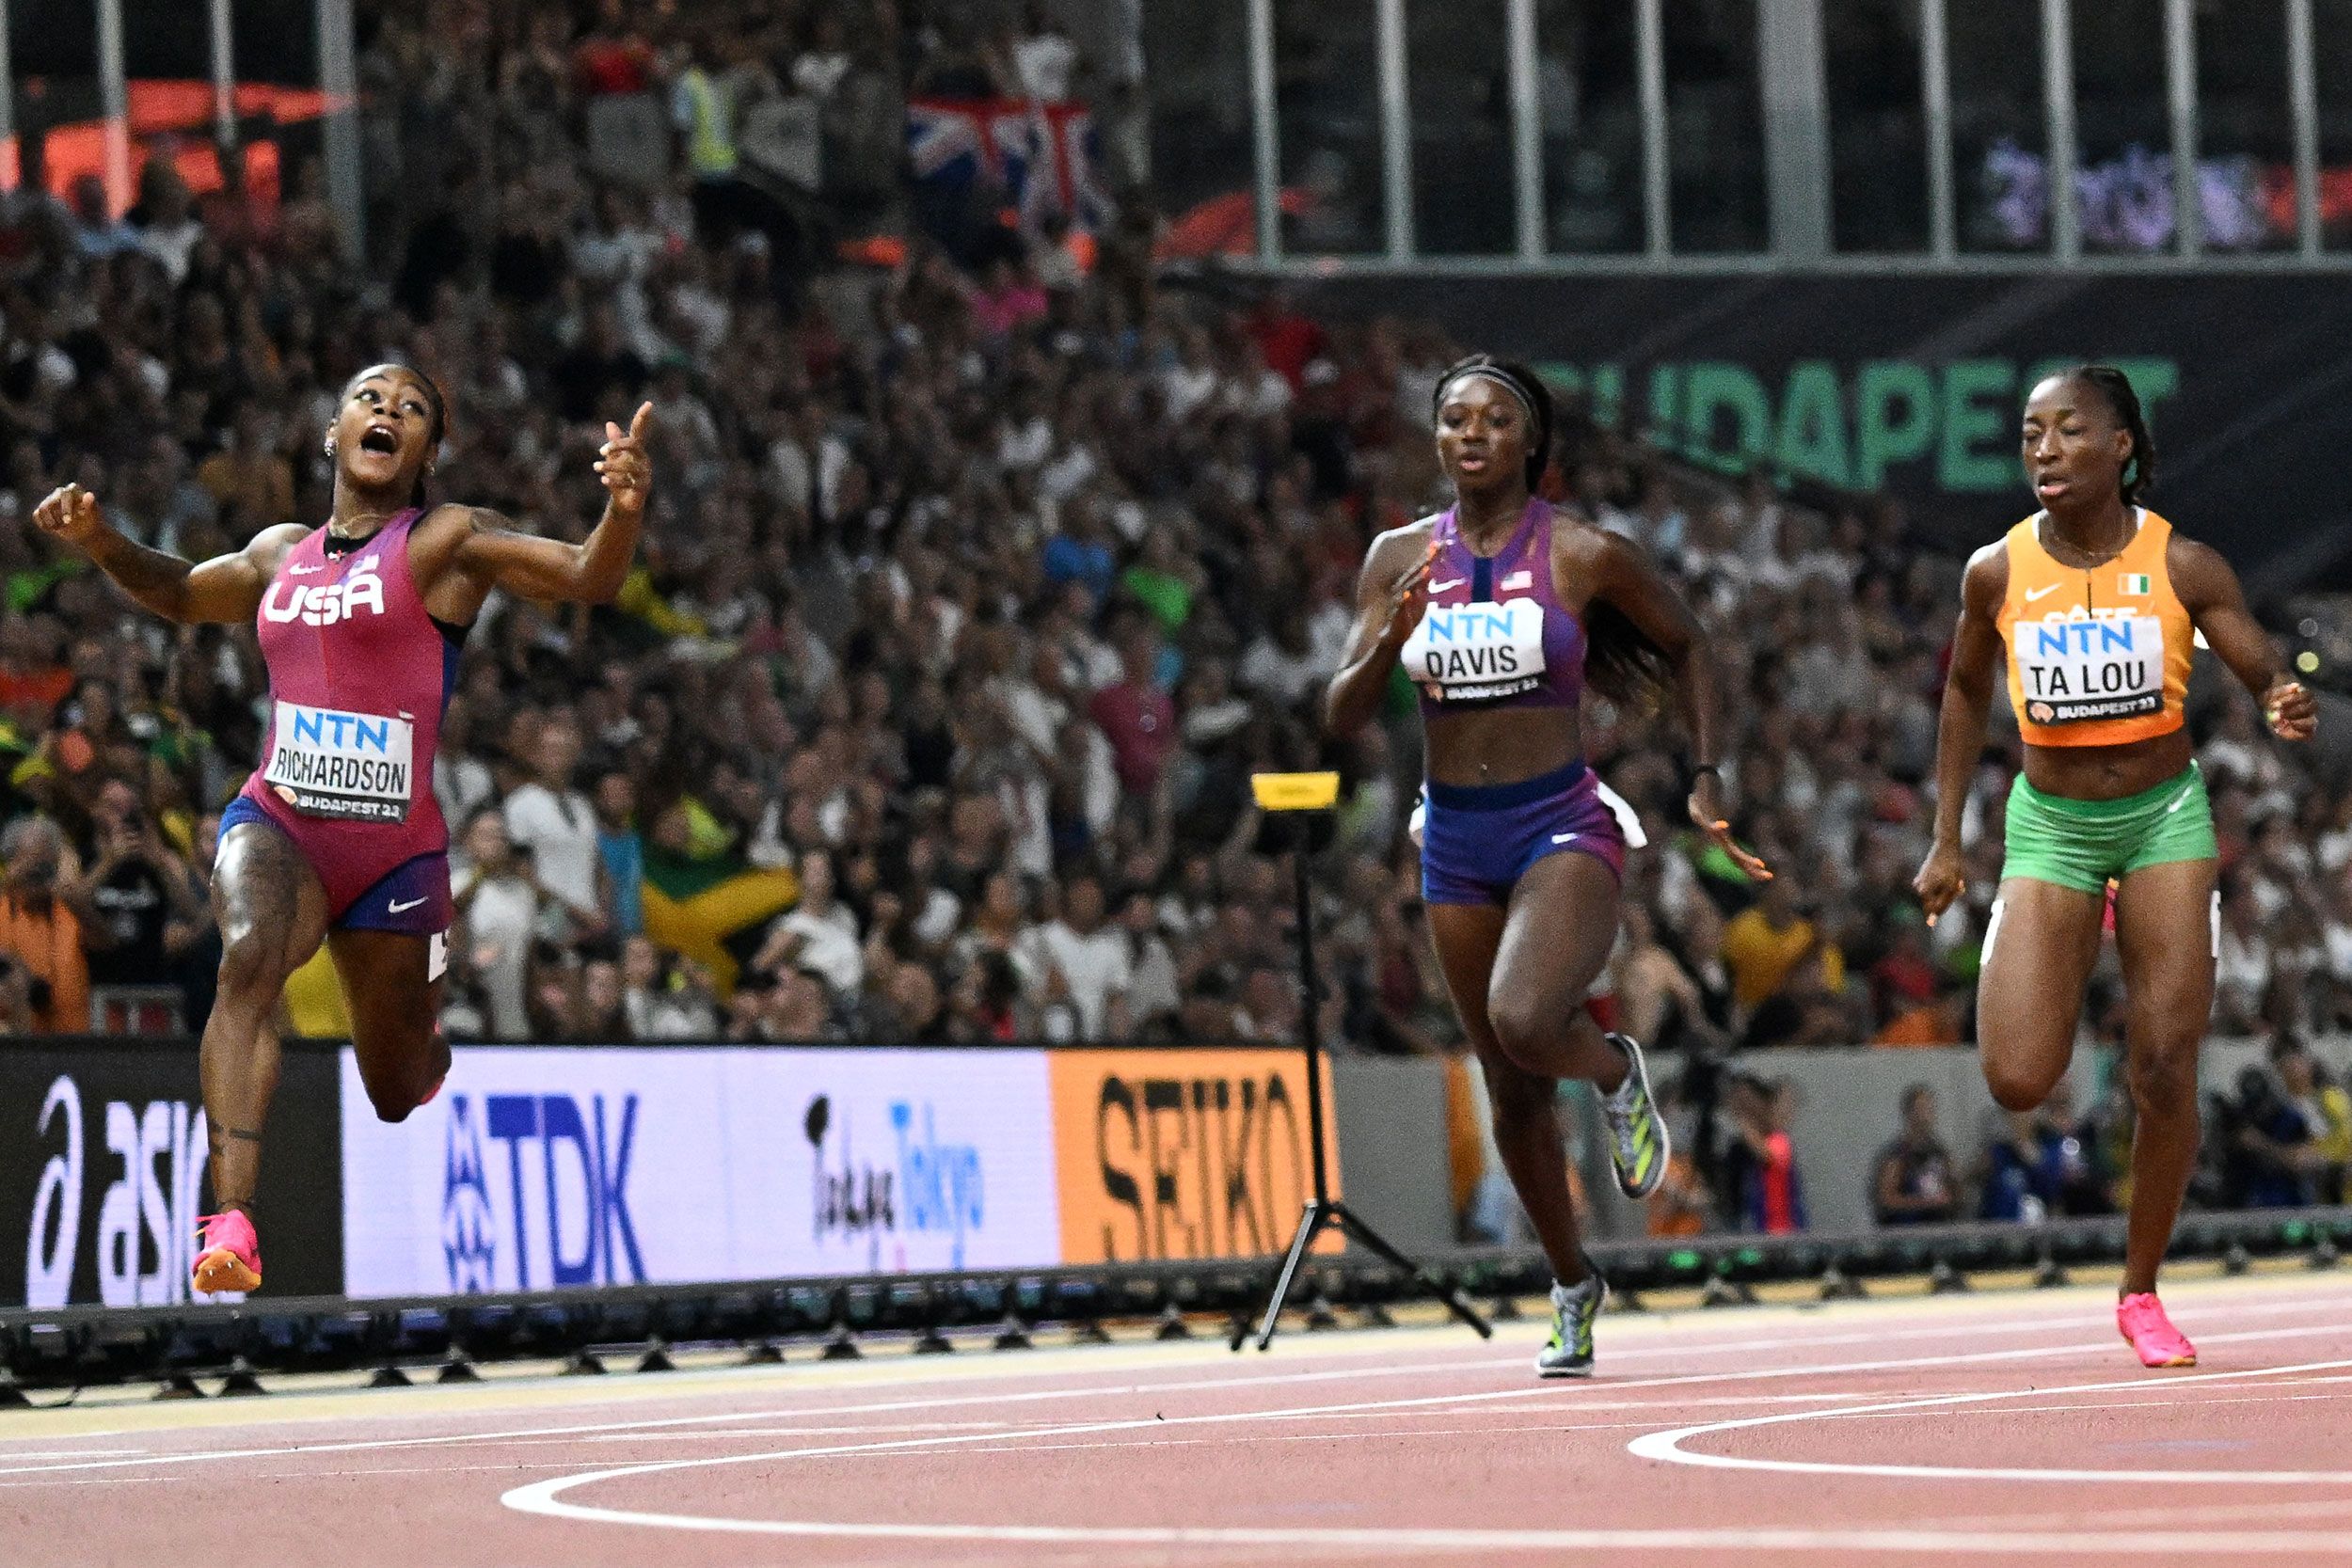 Olympics Women's 100m Record: Fastest Women's 100m Record- Best